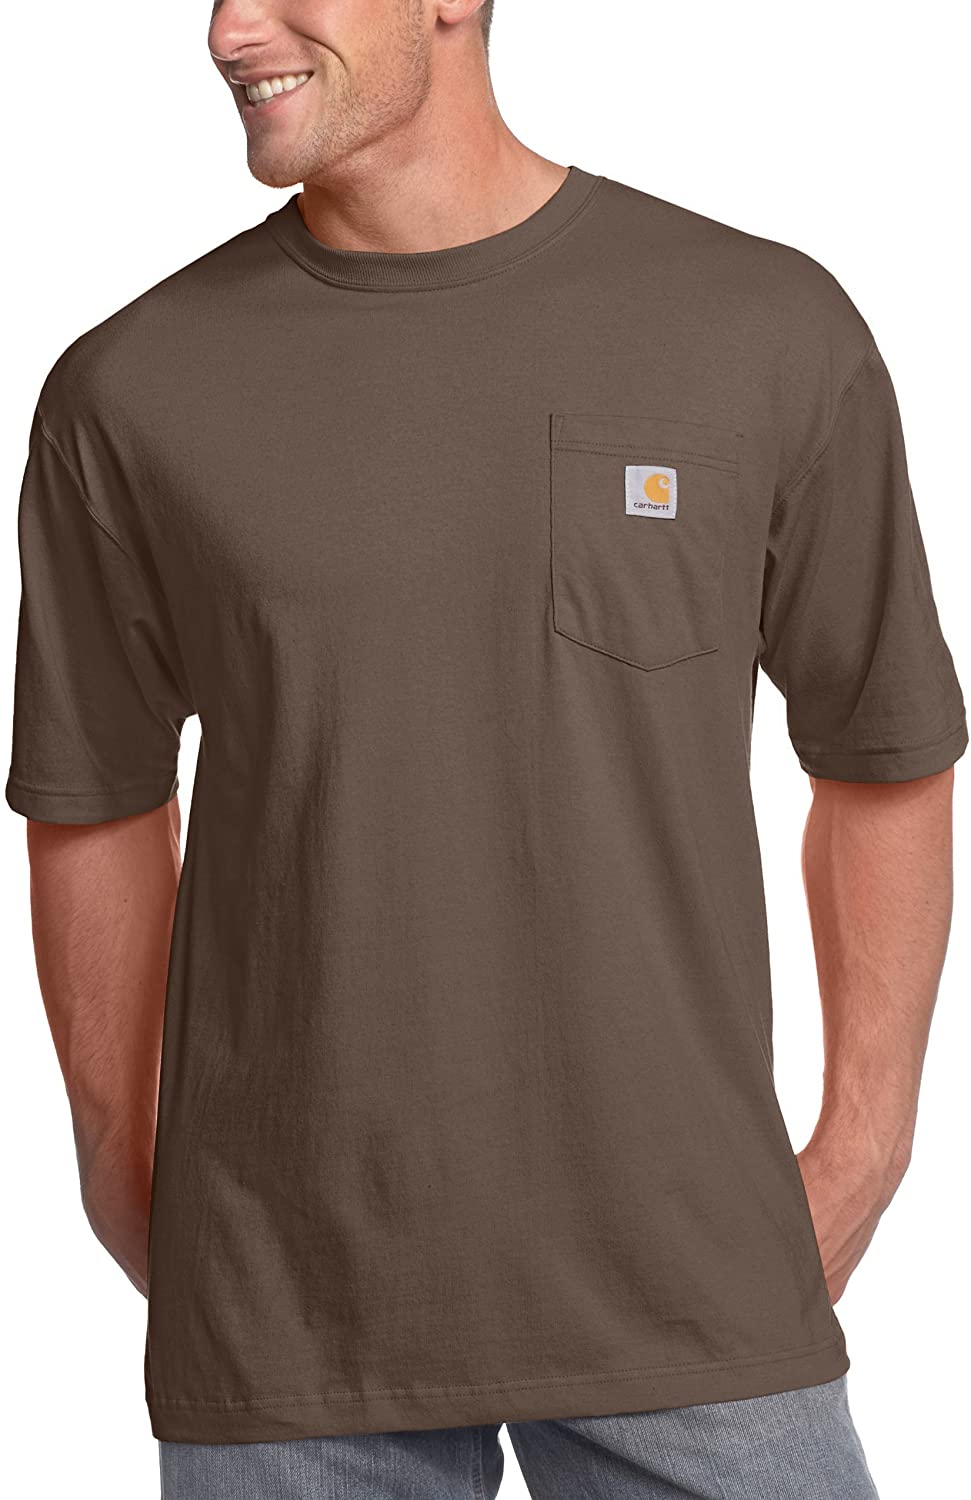 Mens Carhartt Force Short Sleeve Pocket T-Shirt Big Navy